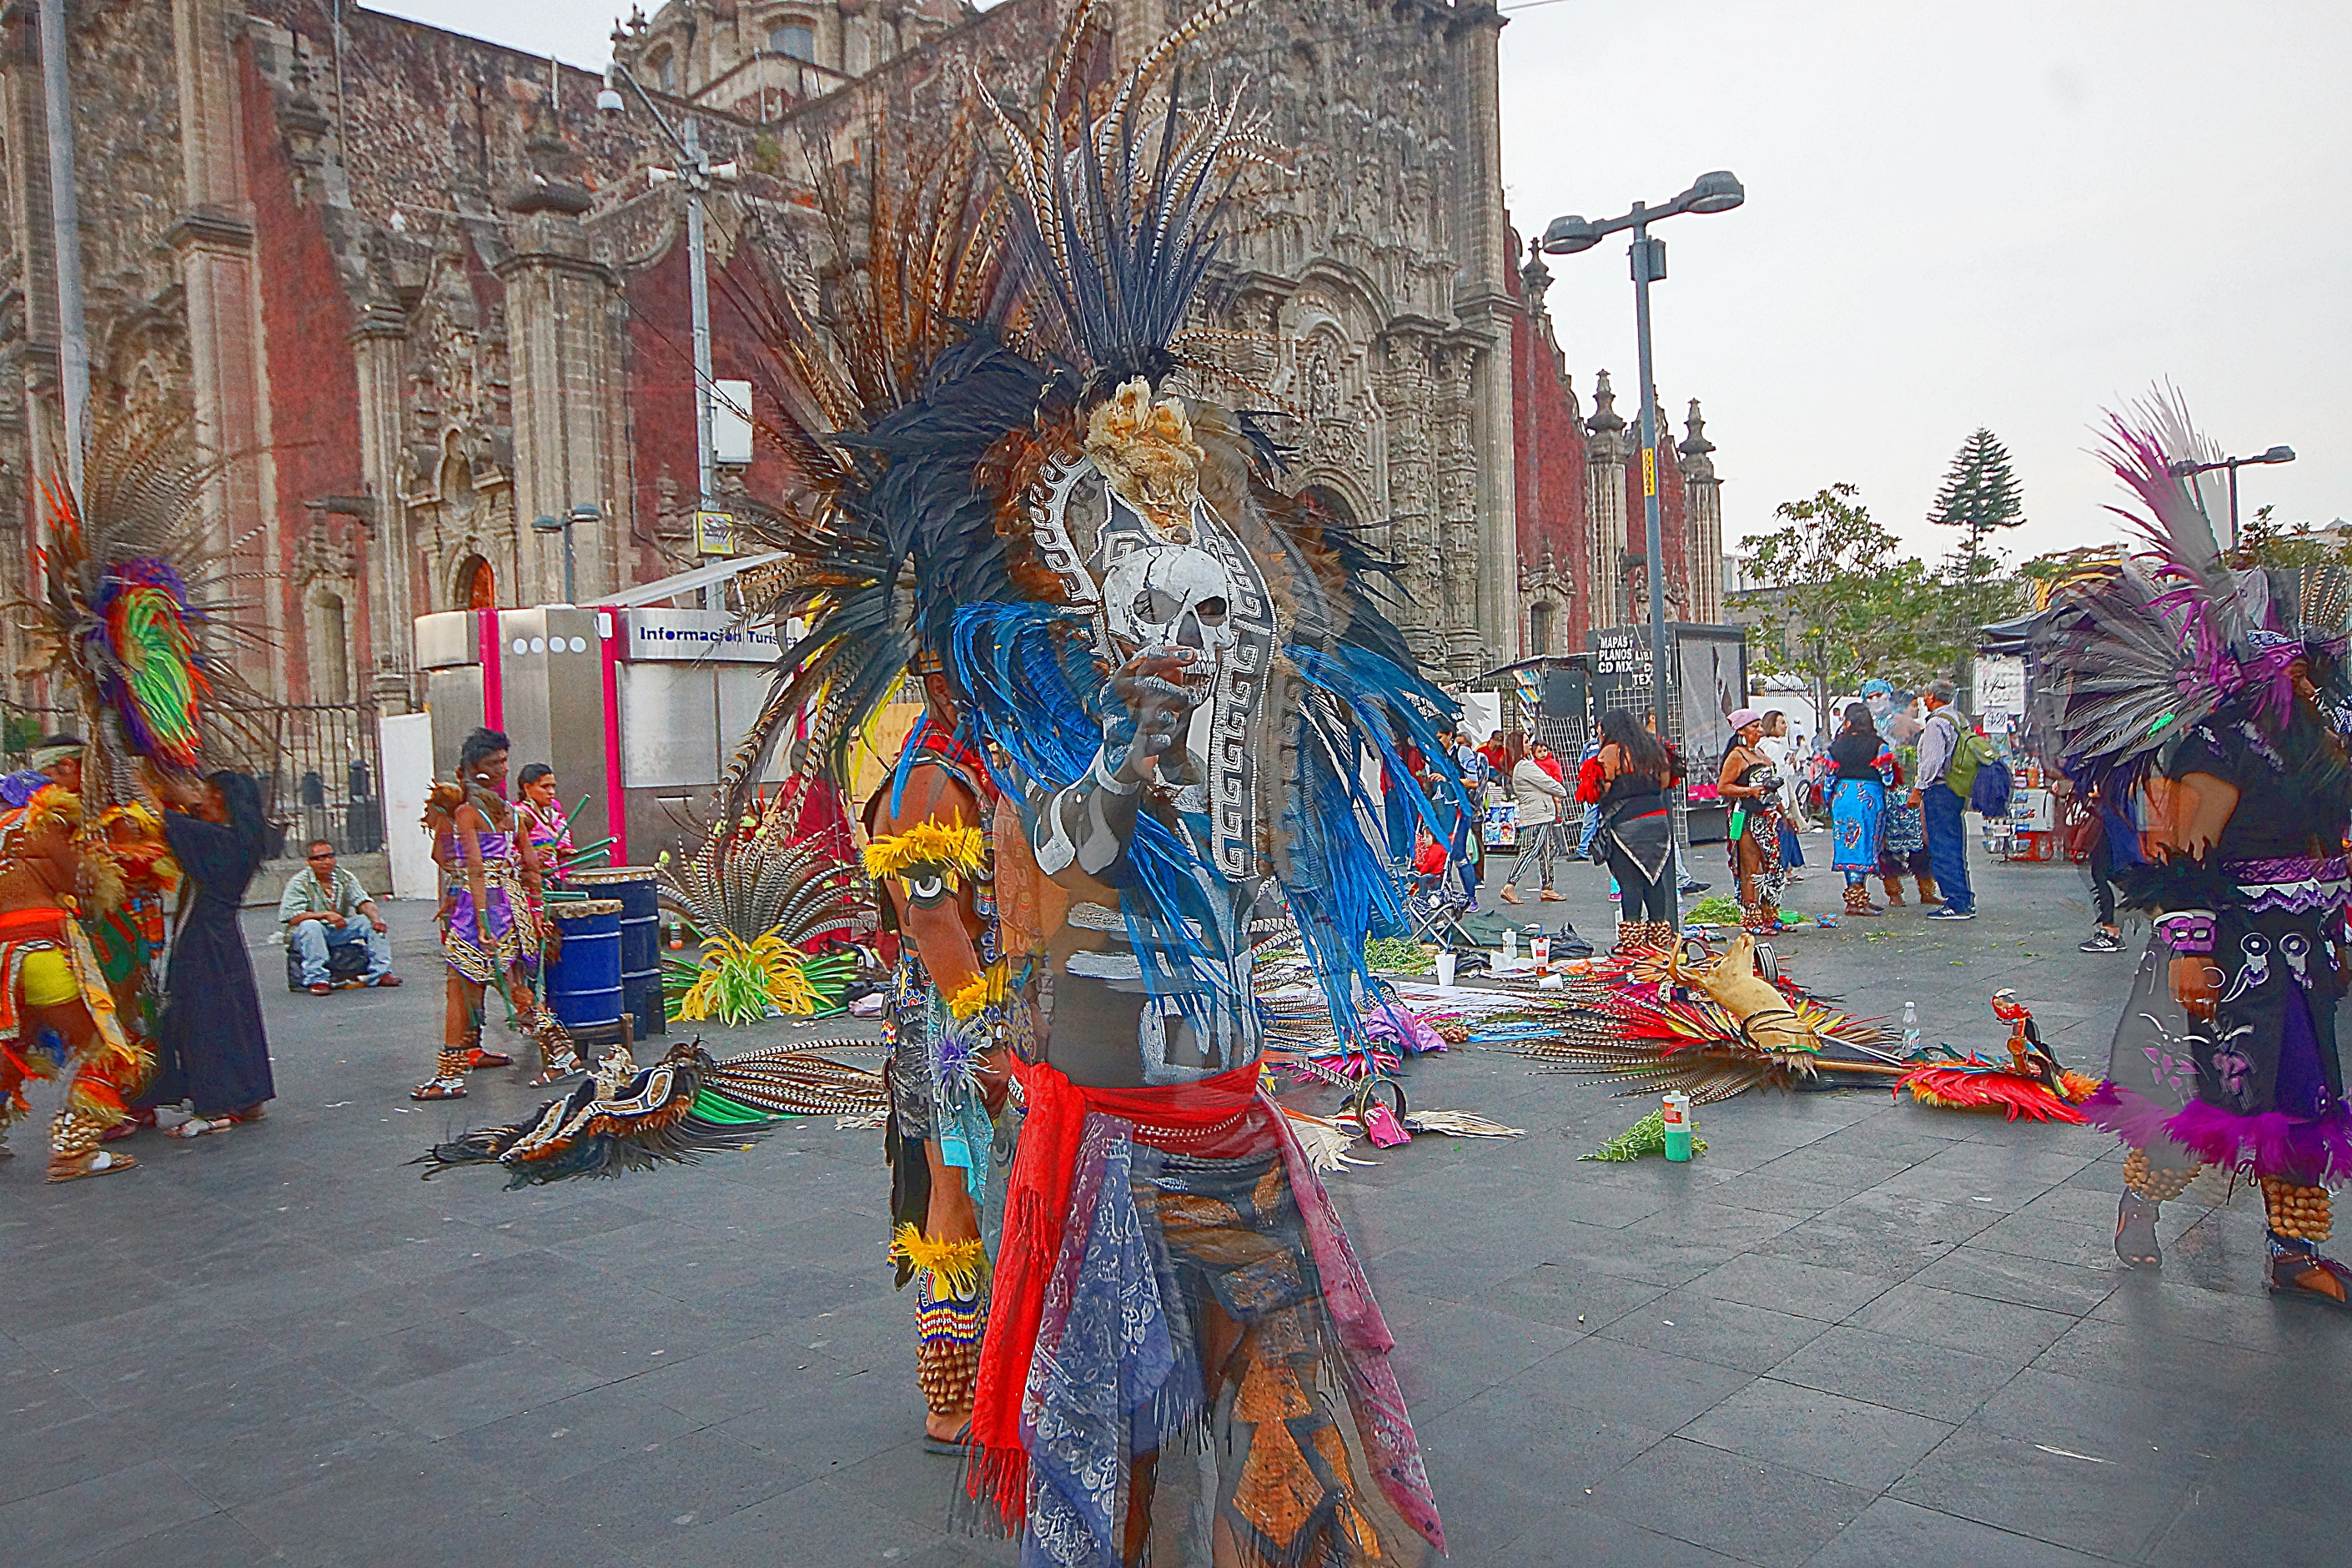 Ряженый в костюме ацтекского вождя возле собора Метрополитена в Мехико. Фото Морошкина В.В.